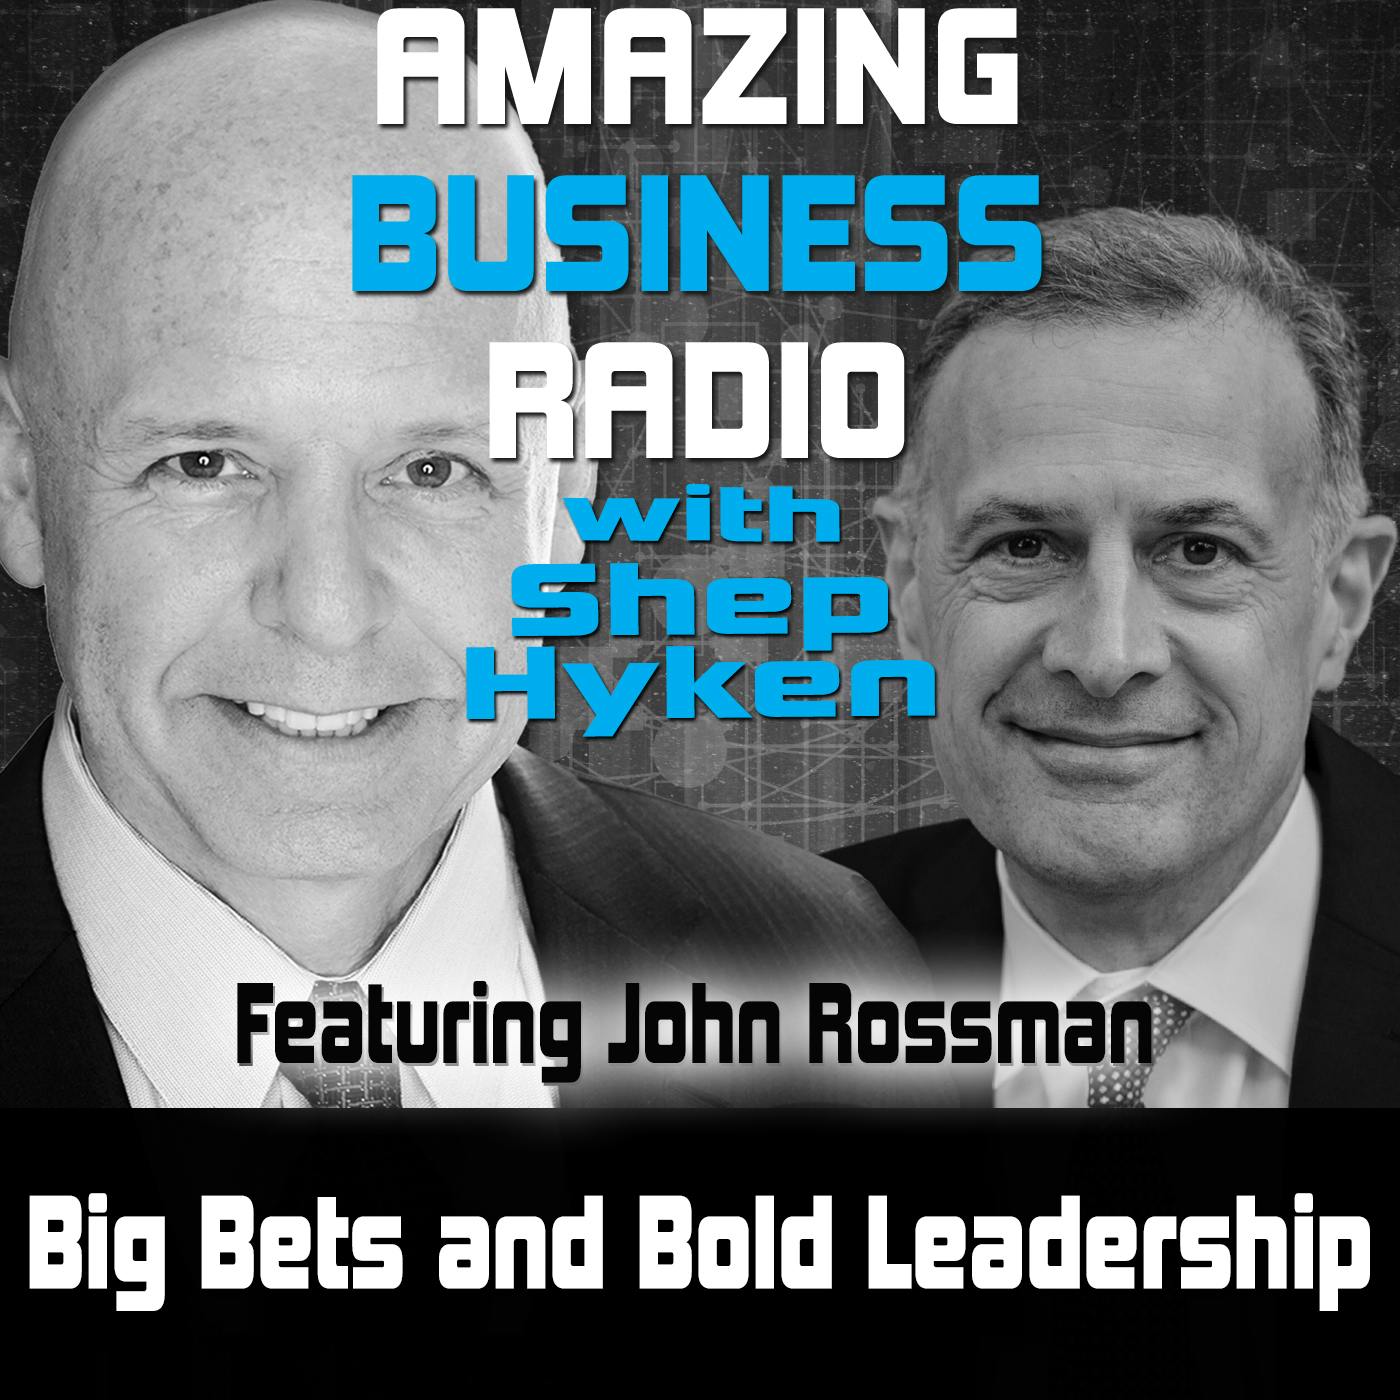 Big Bets and Bold Leadership Featuring John Rossman